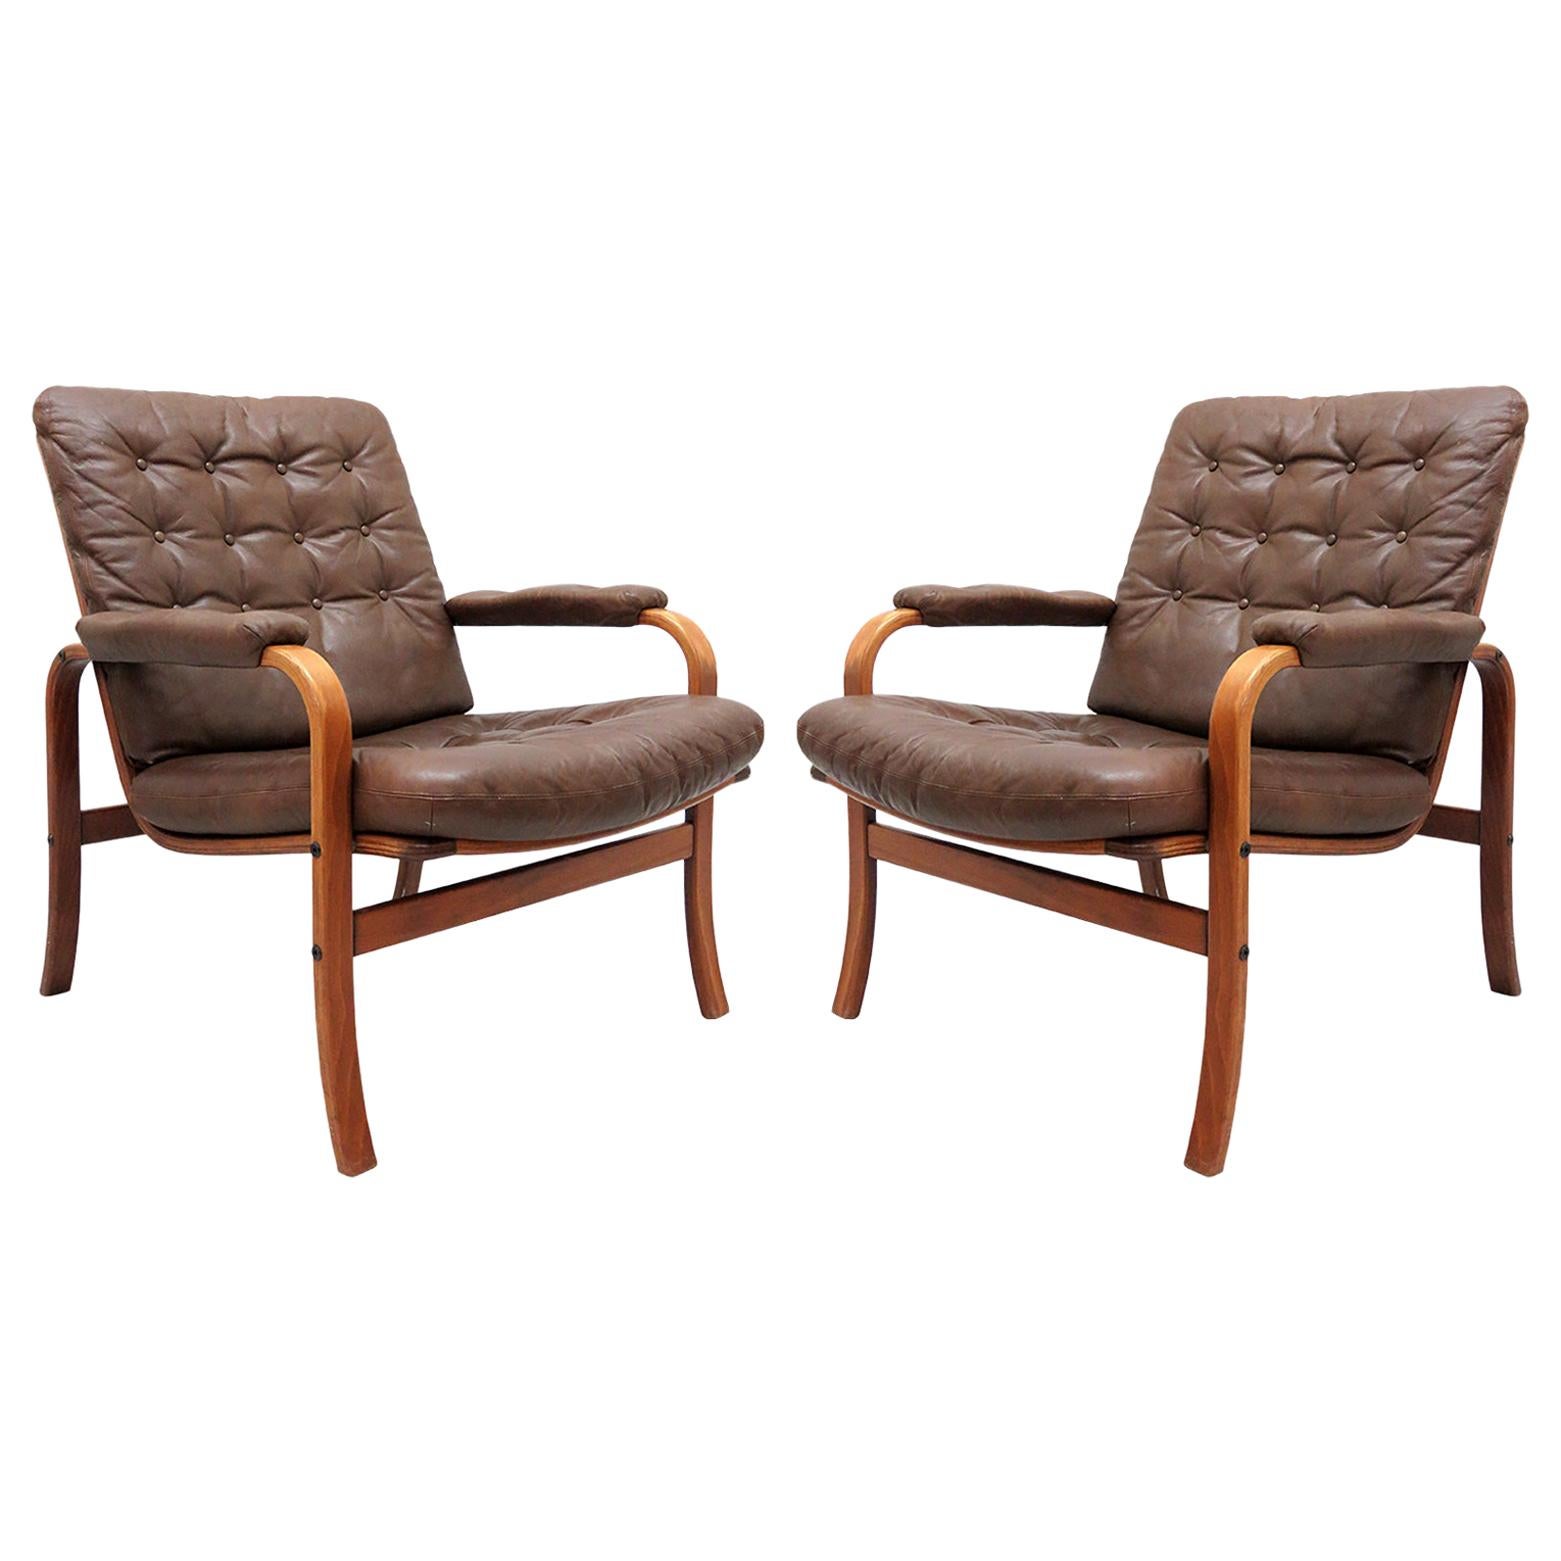 Swedish Bentwood Leather Chairs by Göte Möbler Nässjö, 1950